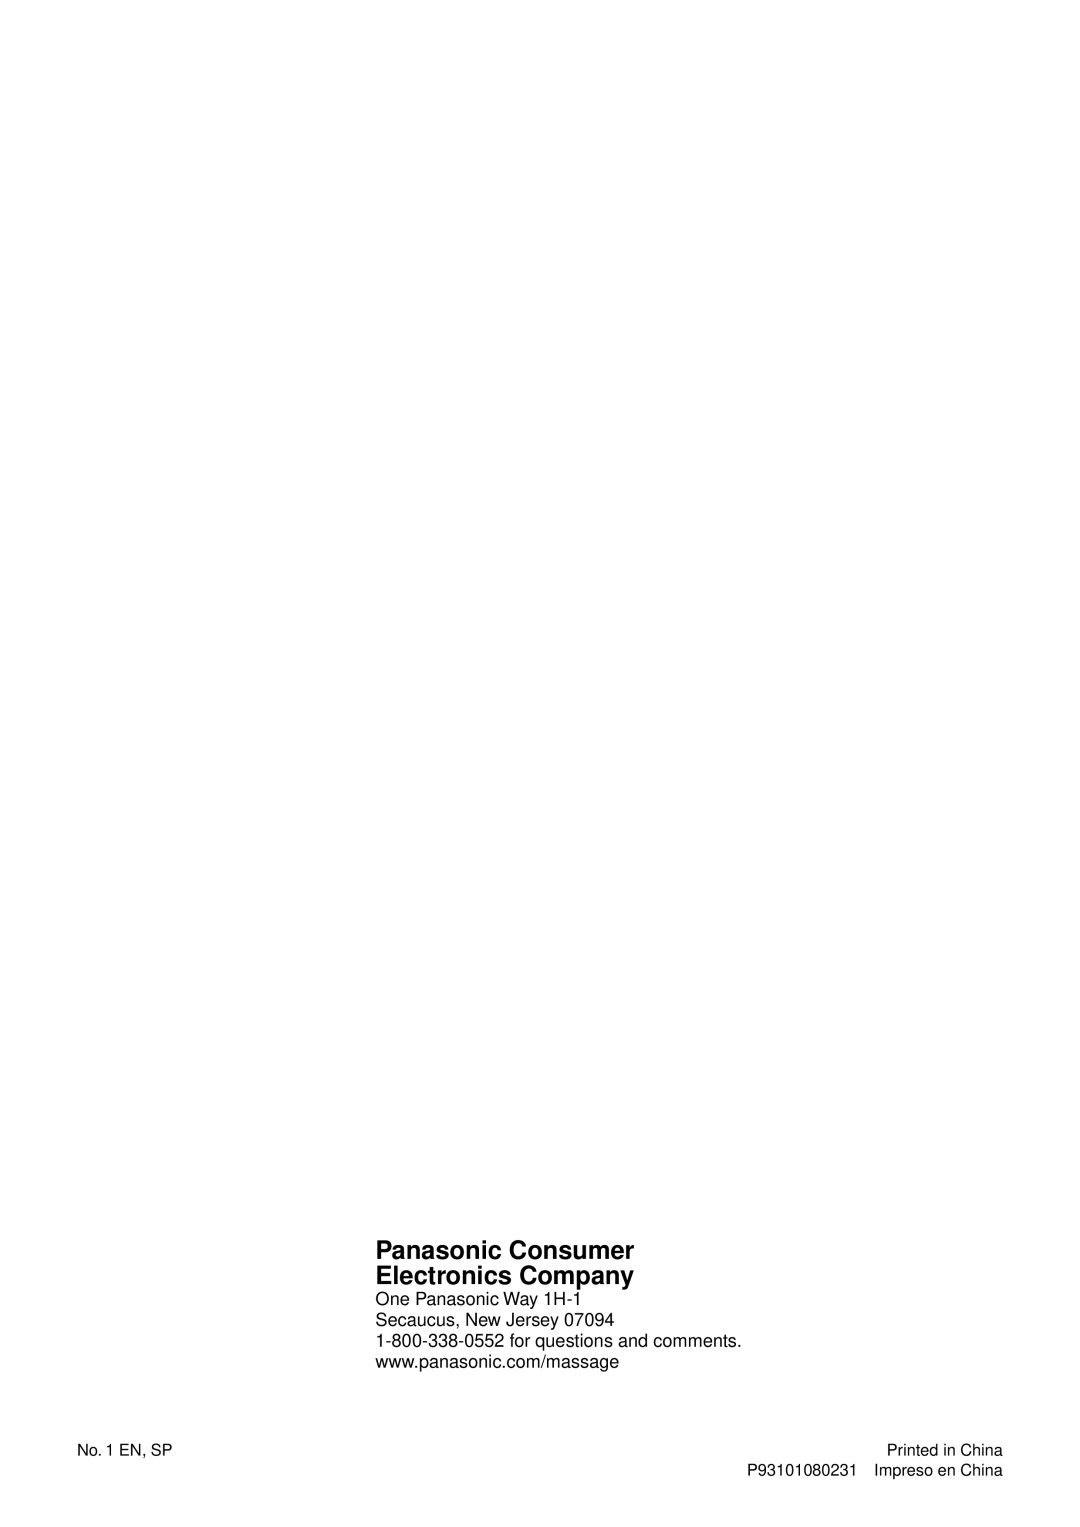 Panasonic EP1080 manual Panasonic Consumer Electronics Company, One Panasonic Way 1H-1Secaucus, New Jersey 